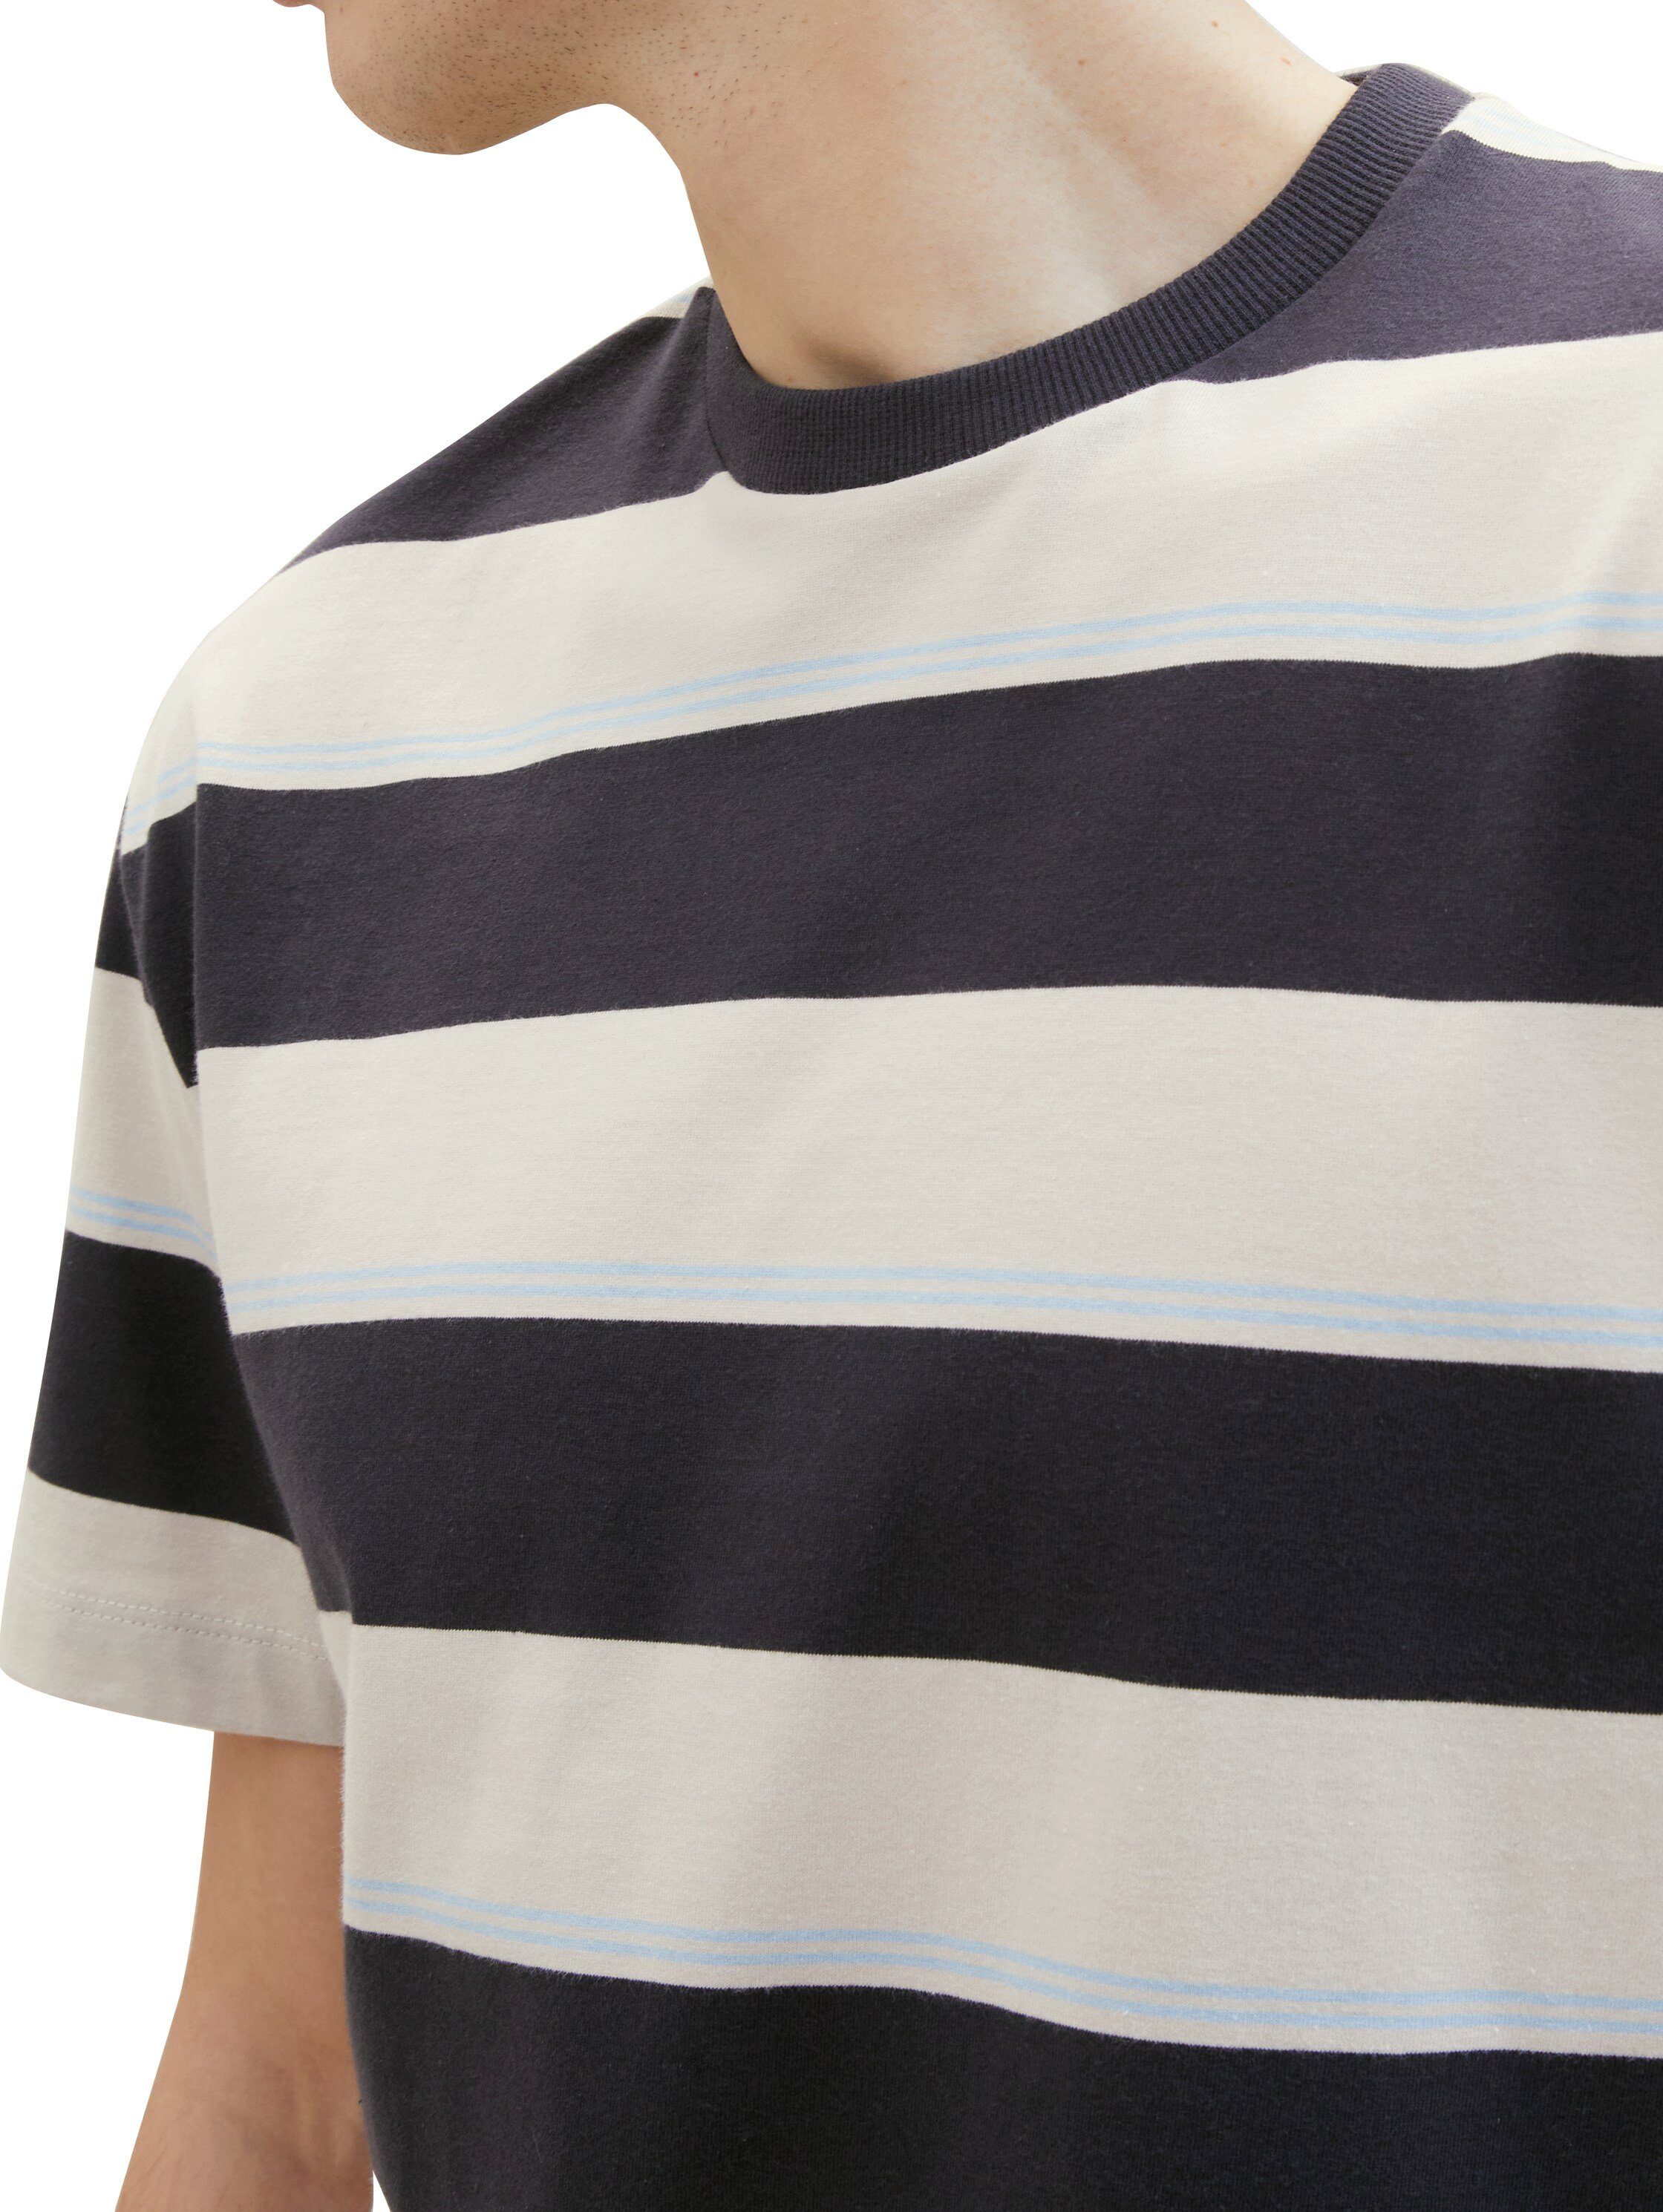 Tom Tailor Denim T-shirt in streep-look